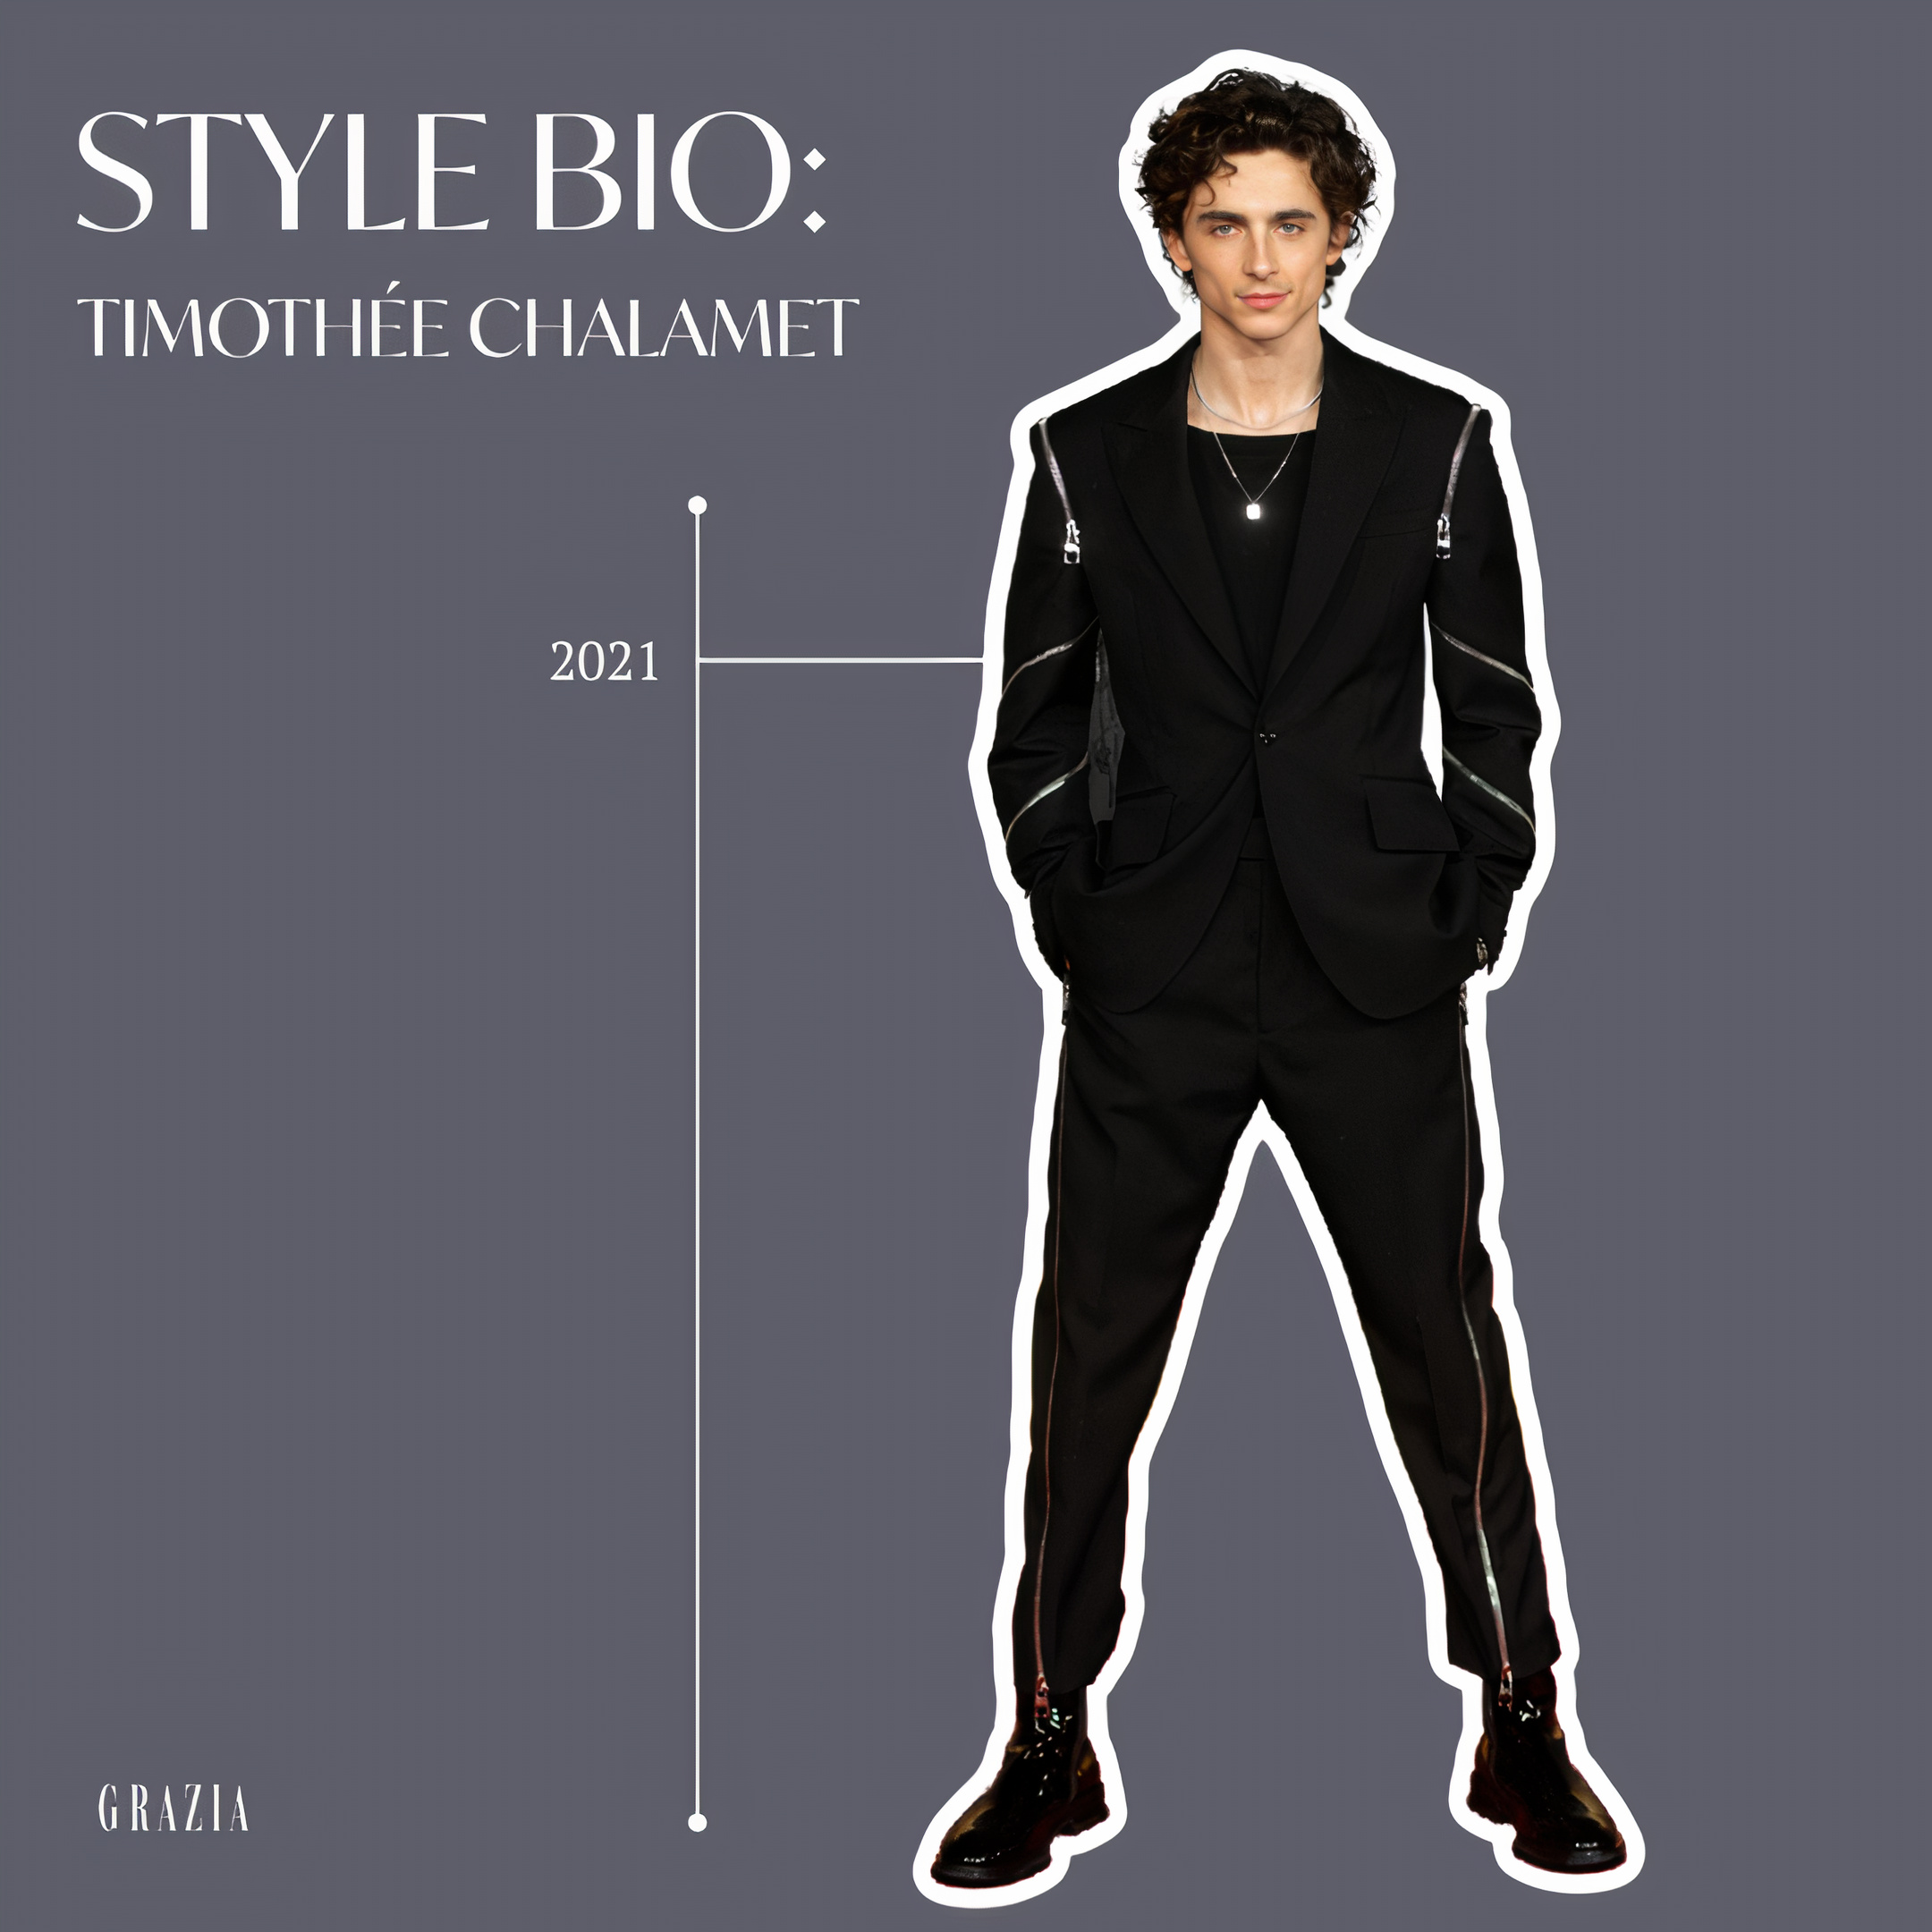 style bio: Timothée Chalamet